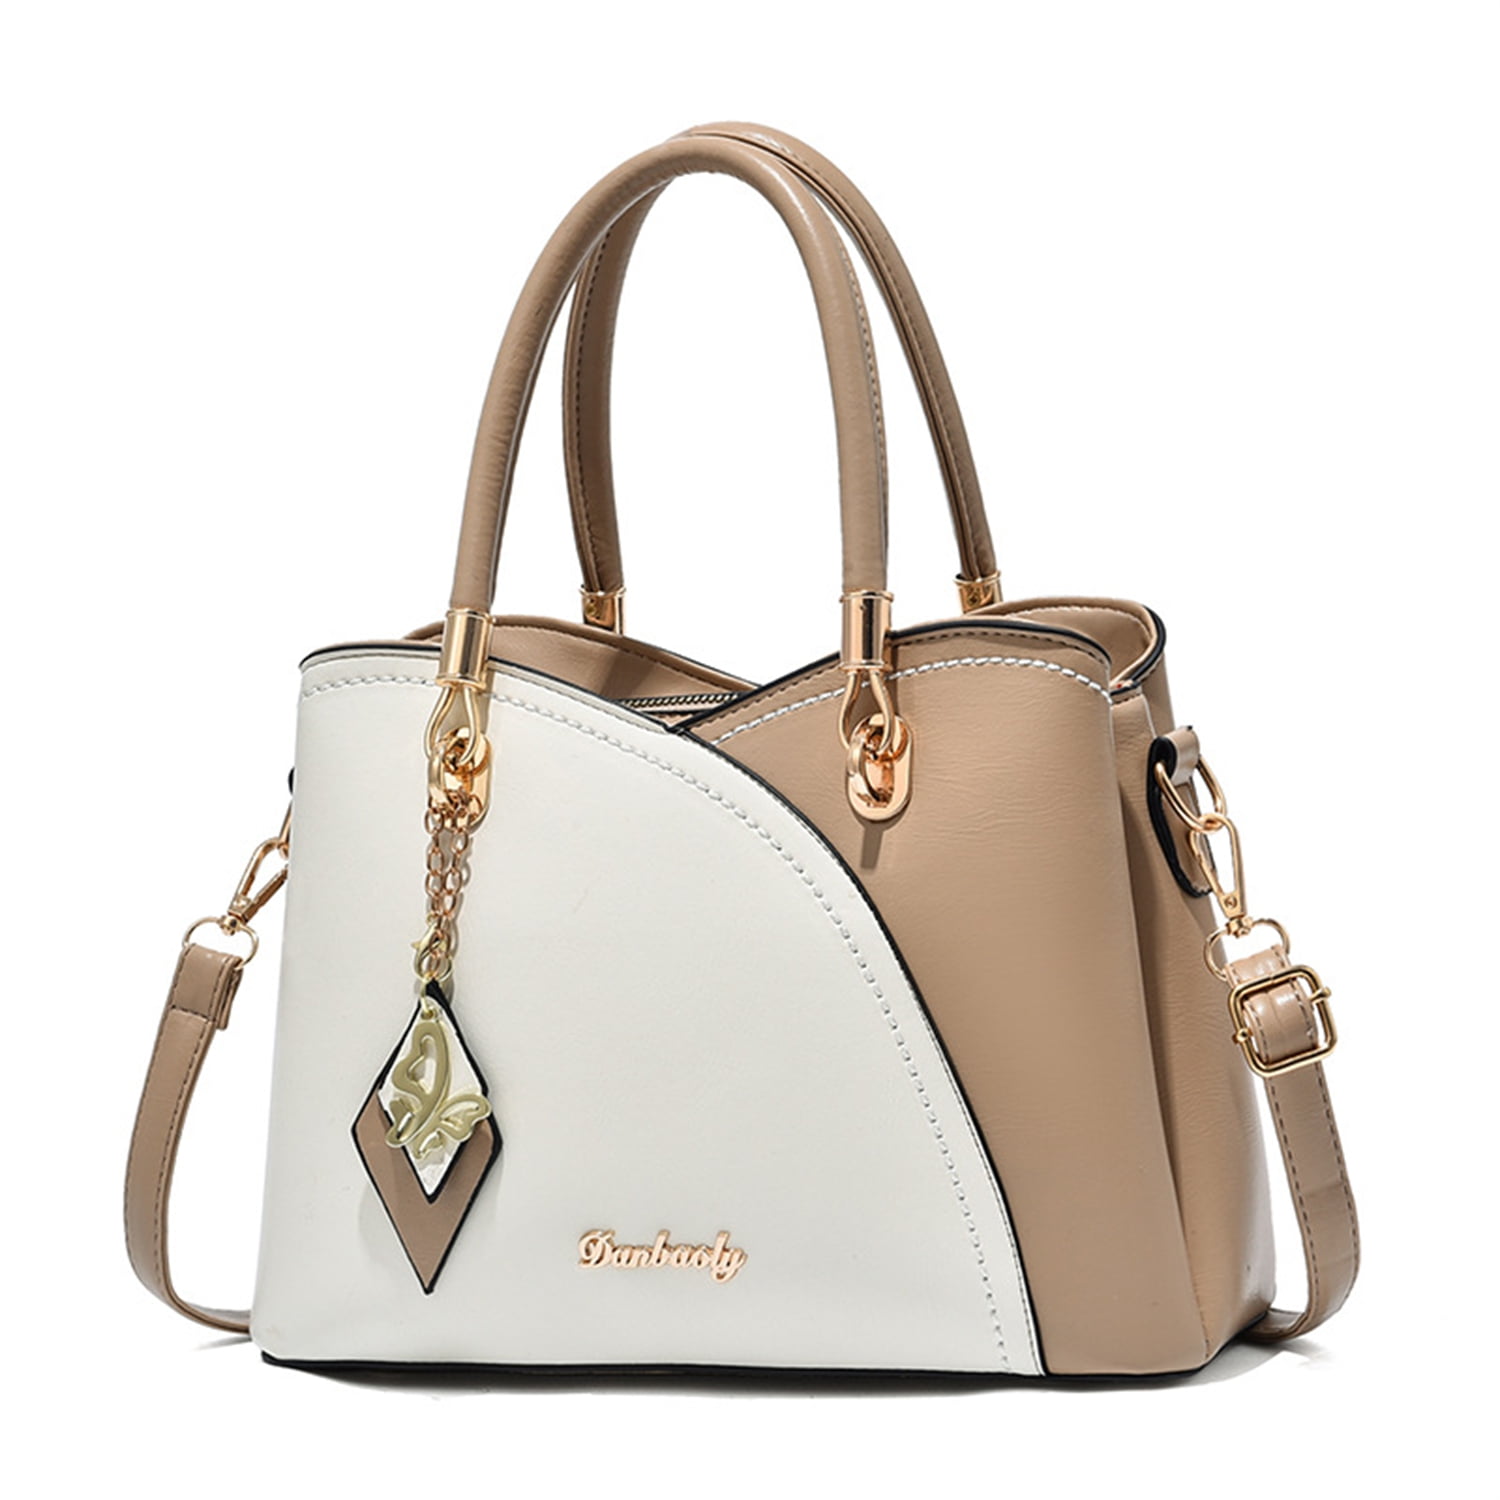 SCARLETON Purses for Women Large Hobo Bags Satchel Handbags for Women Top  Handle Shoulder Bag Tote Vegan Leather, H1485, Brown, 15.5x10